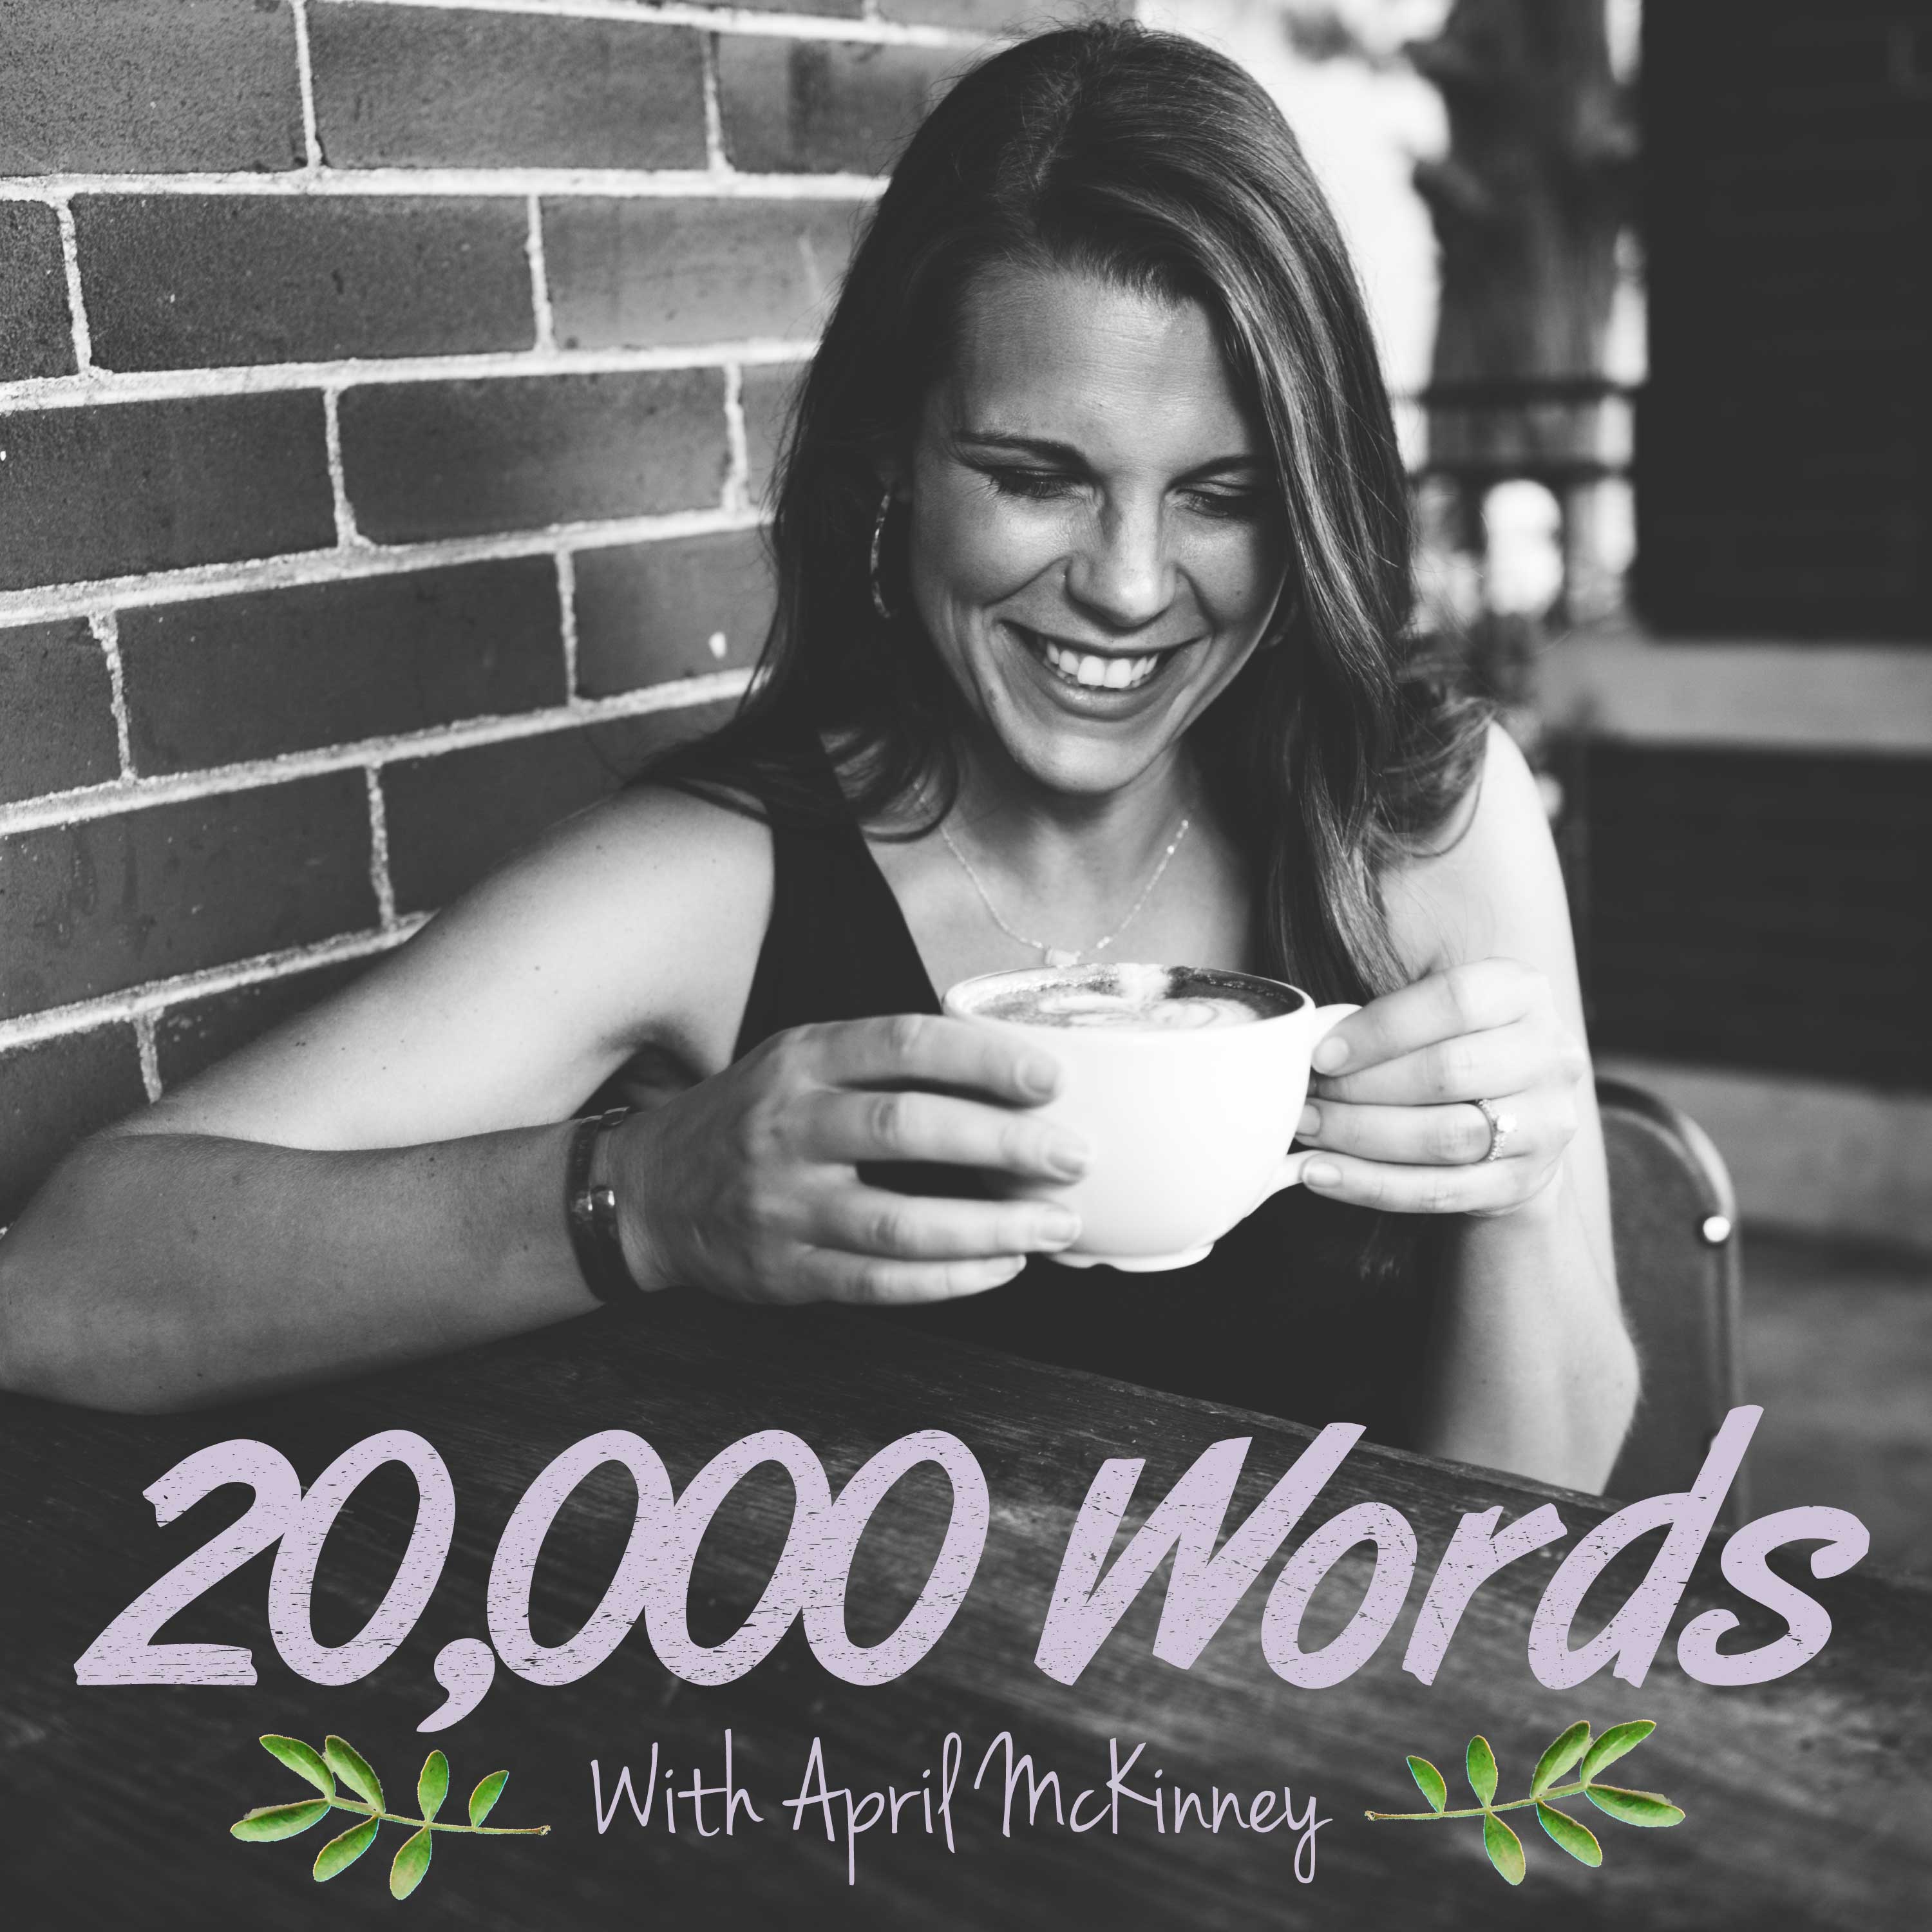 20,000 Words